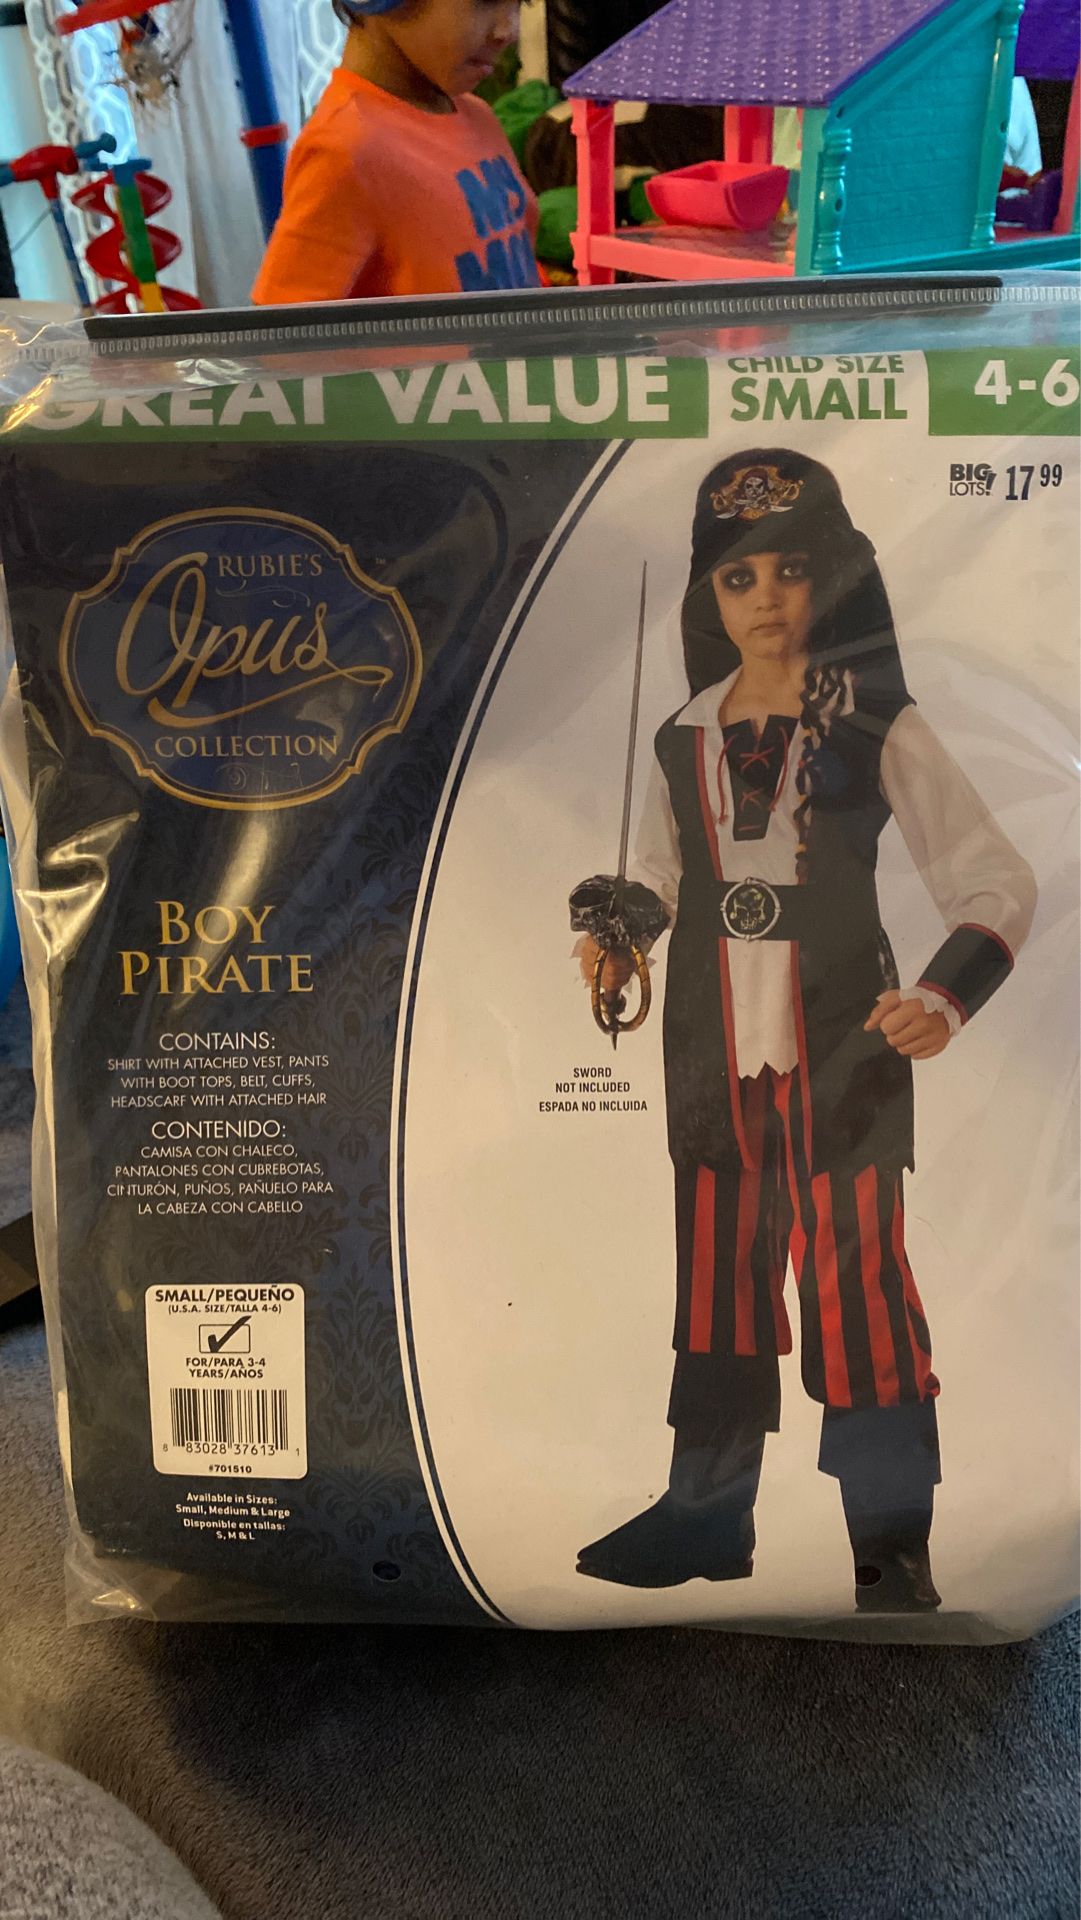 Boy pirate costume